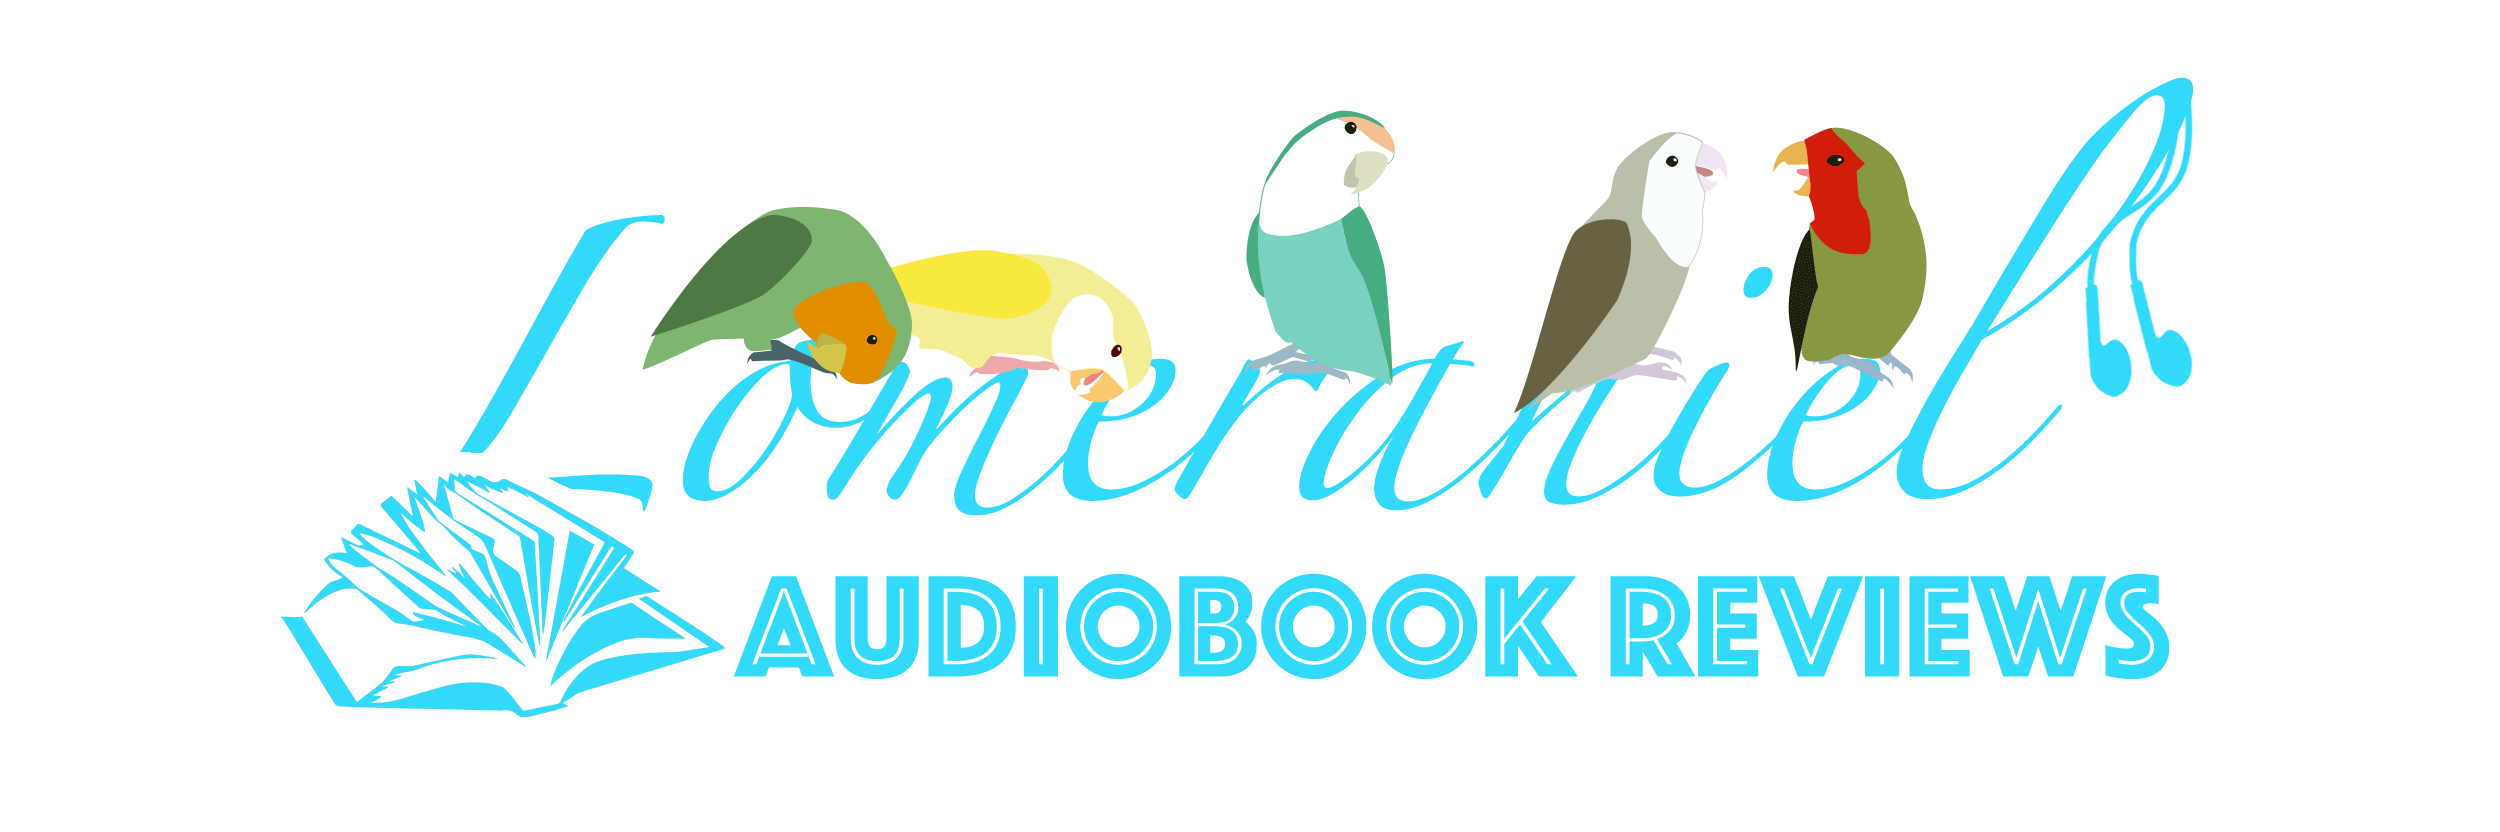 Lomeraniel Audiobook Reviews